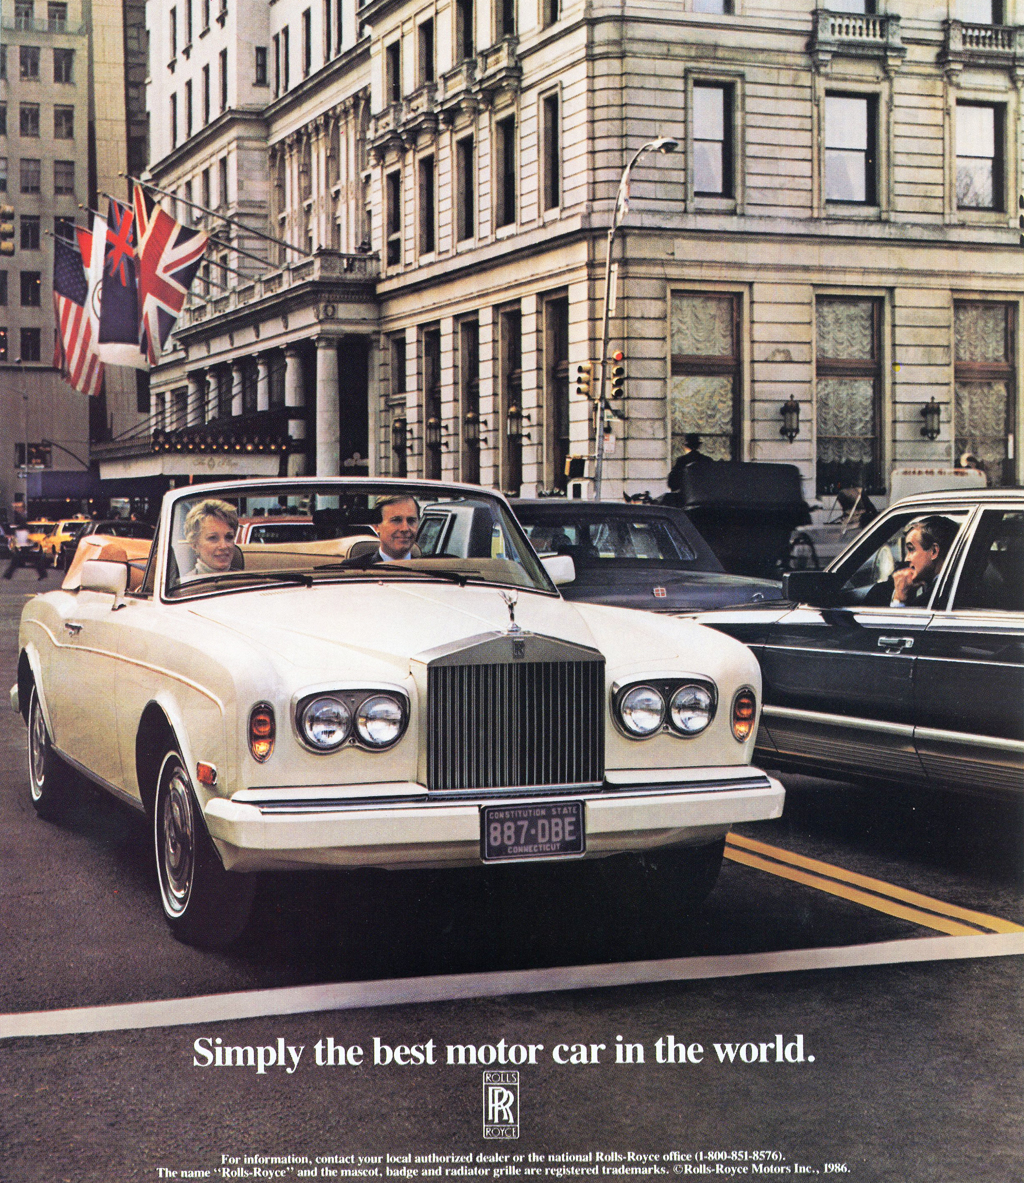 1986 Rolls-Royce Auto Advertising